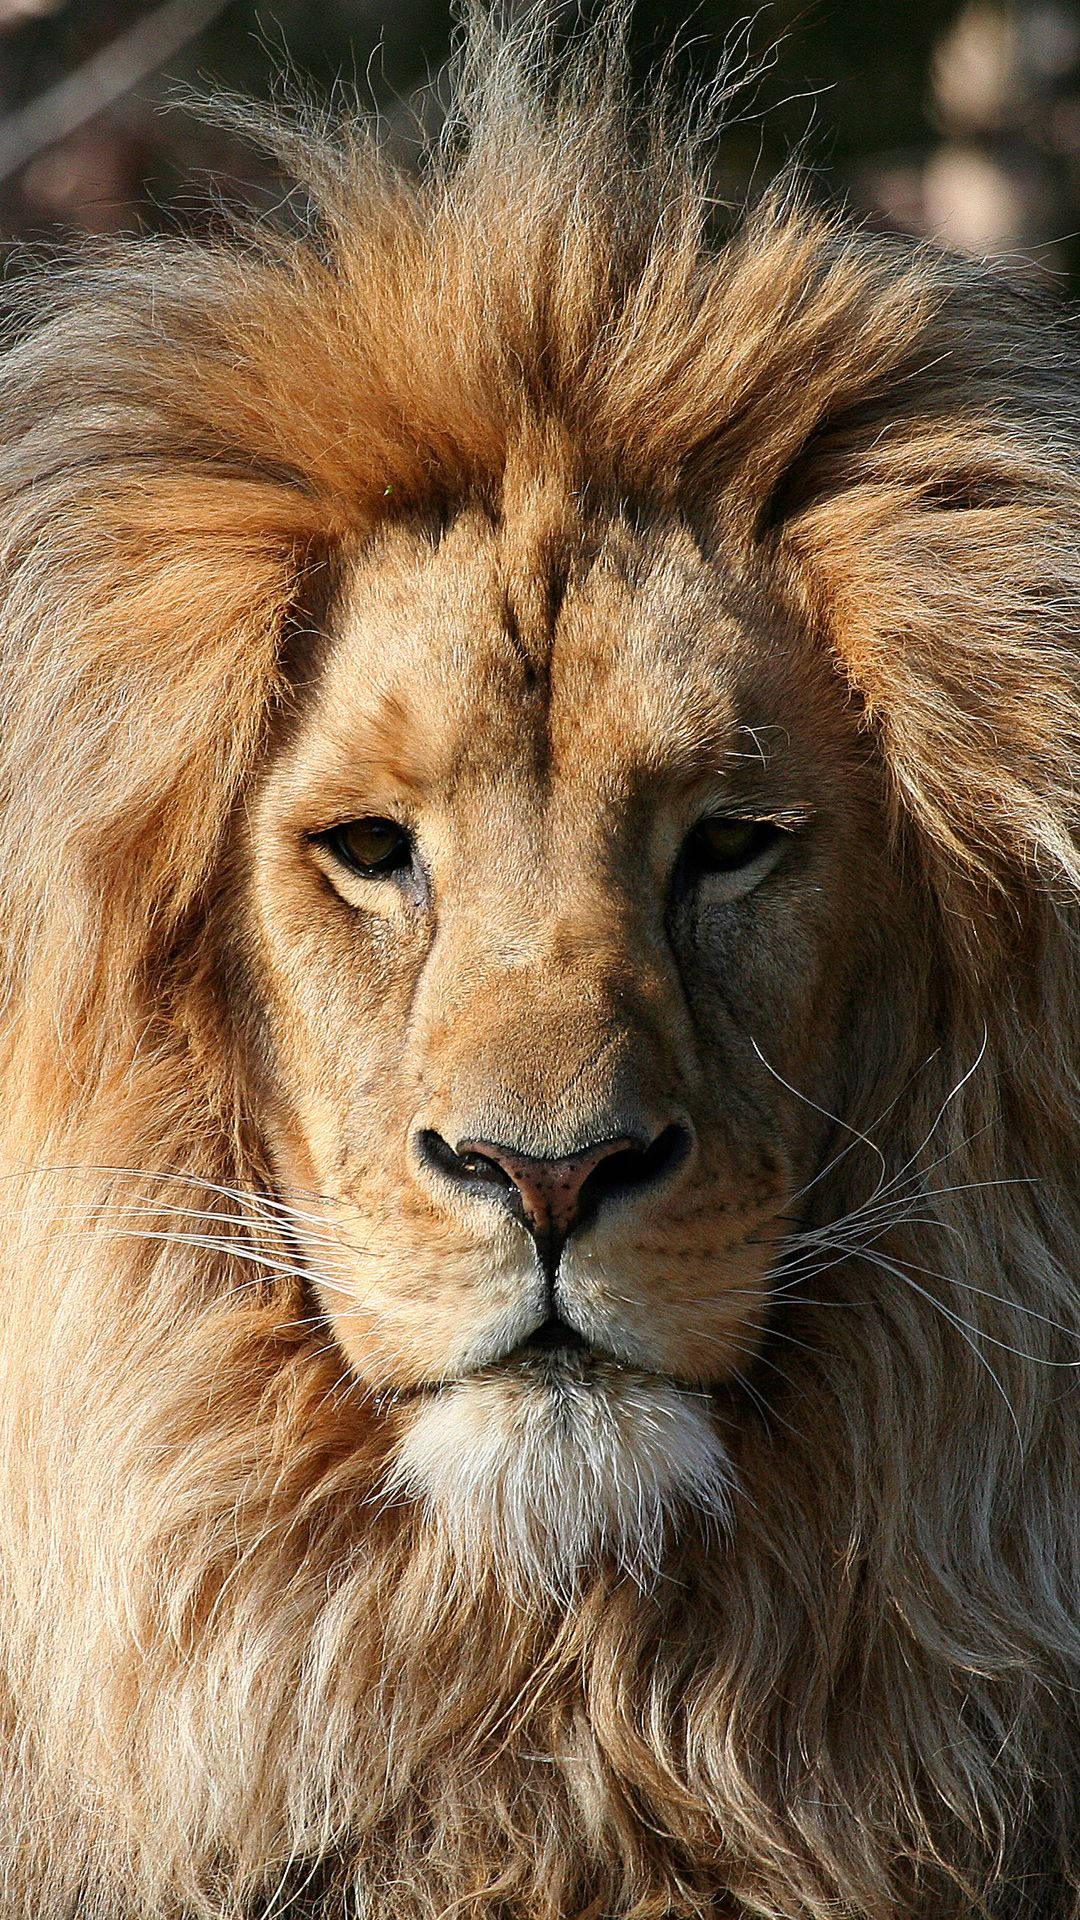 Caption: Majestic Lion Close-up - Iphone Wallpaper Background